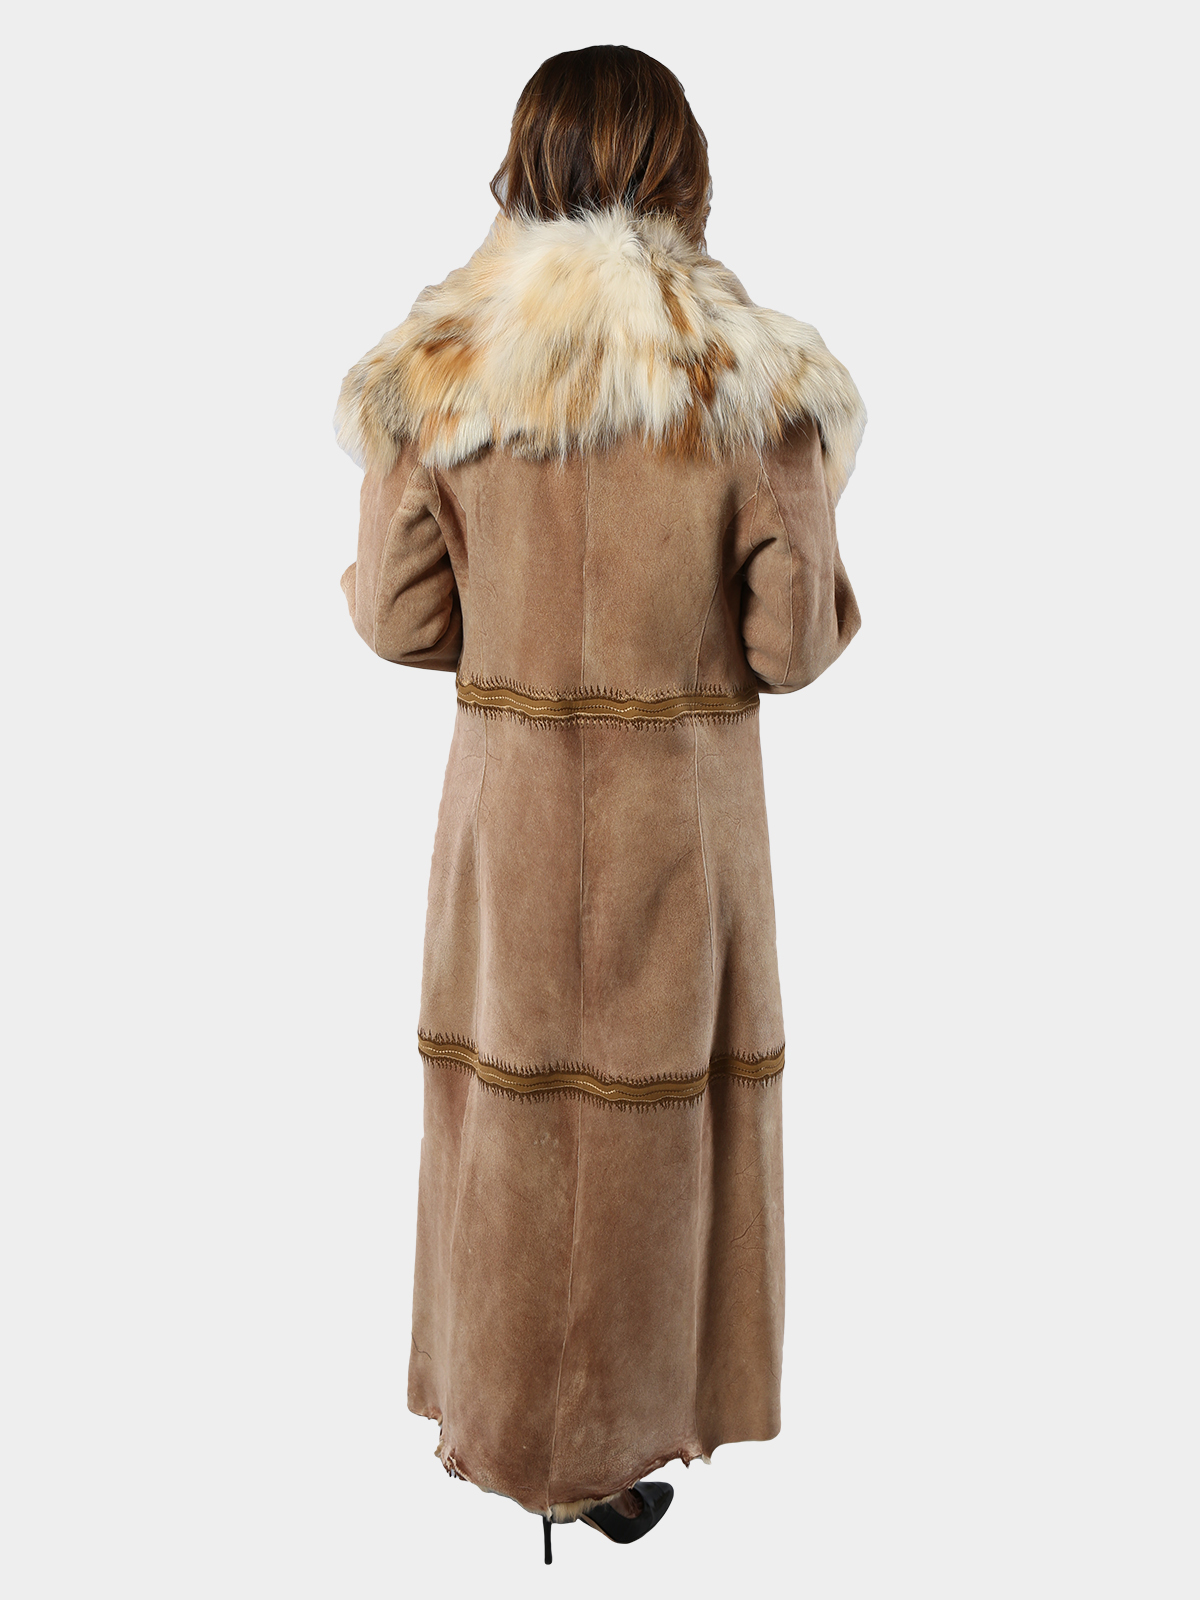 Beige Shearling Lamb Coat with Fox Trim (Women's Small) - Estate Furs